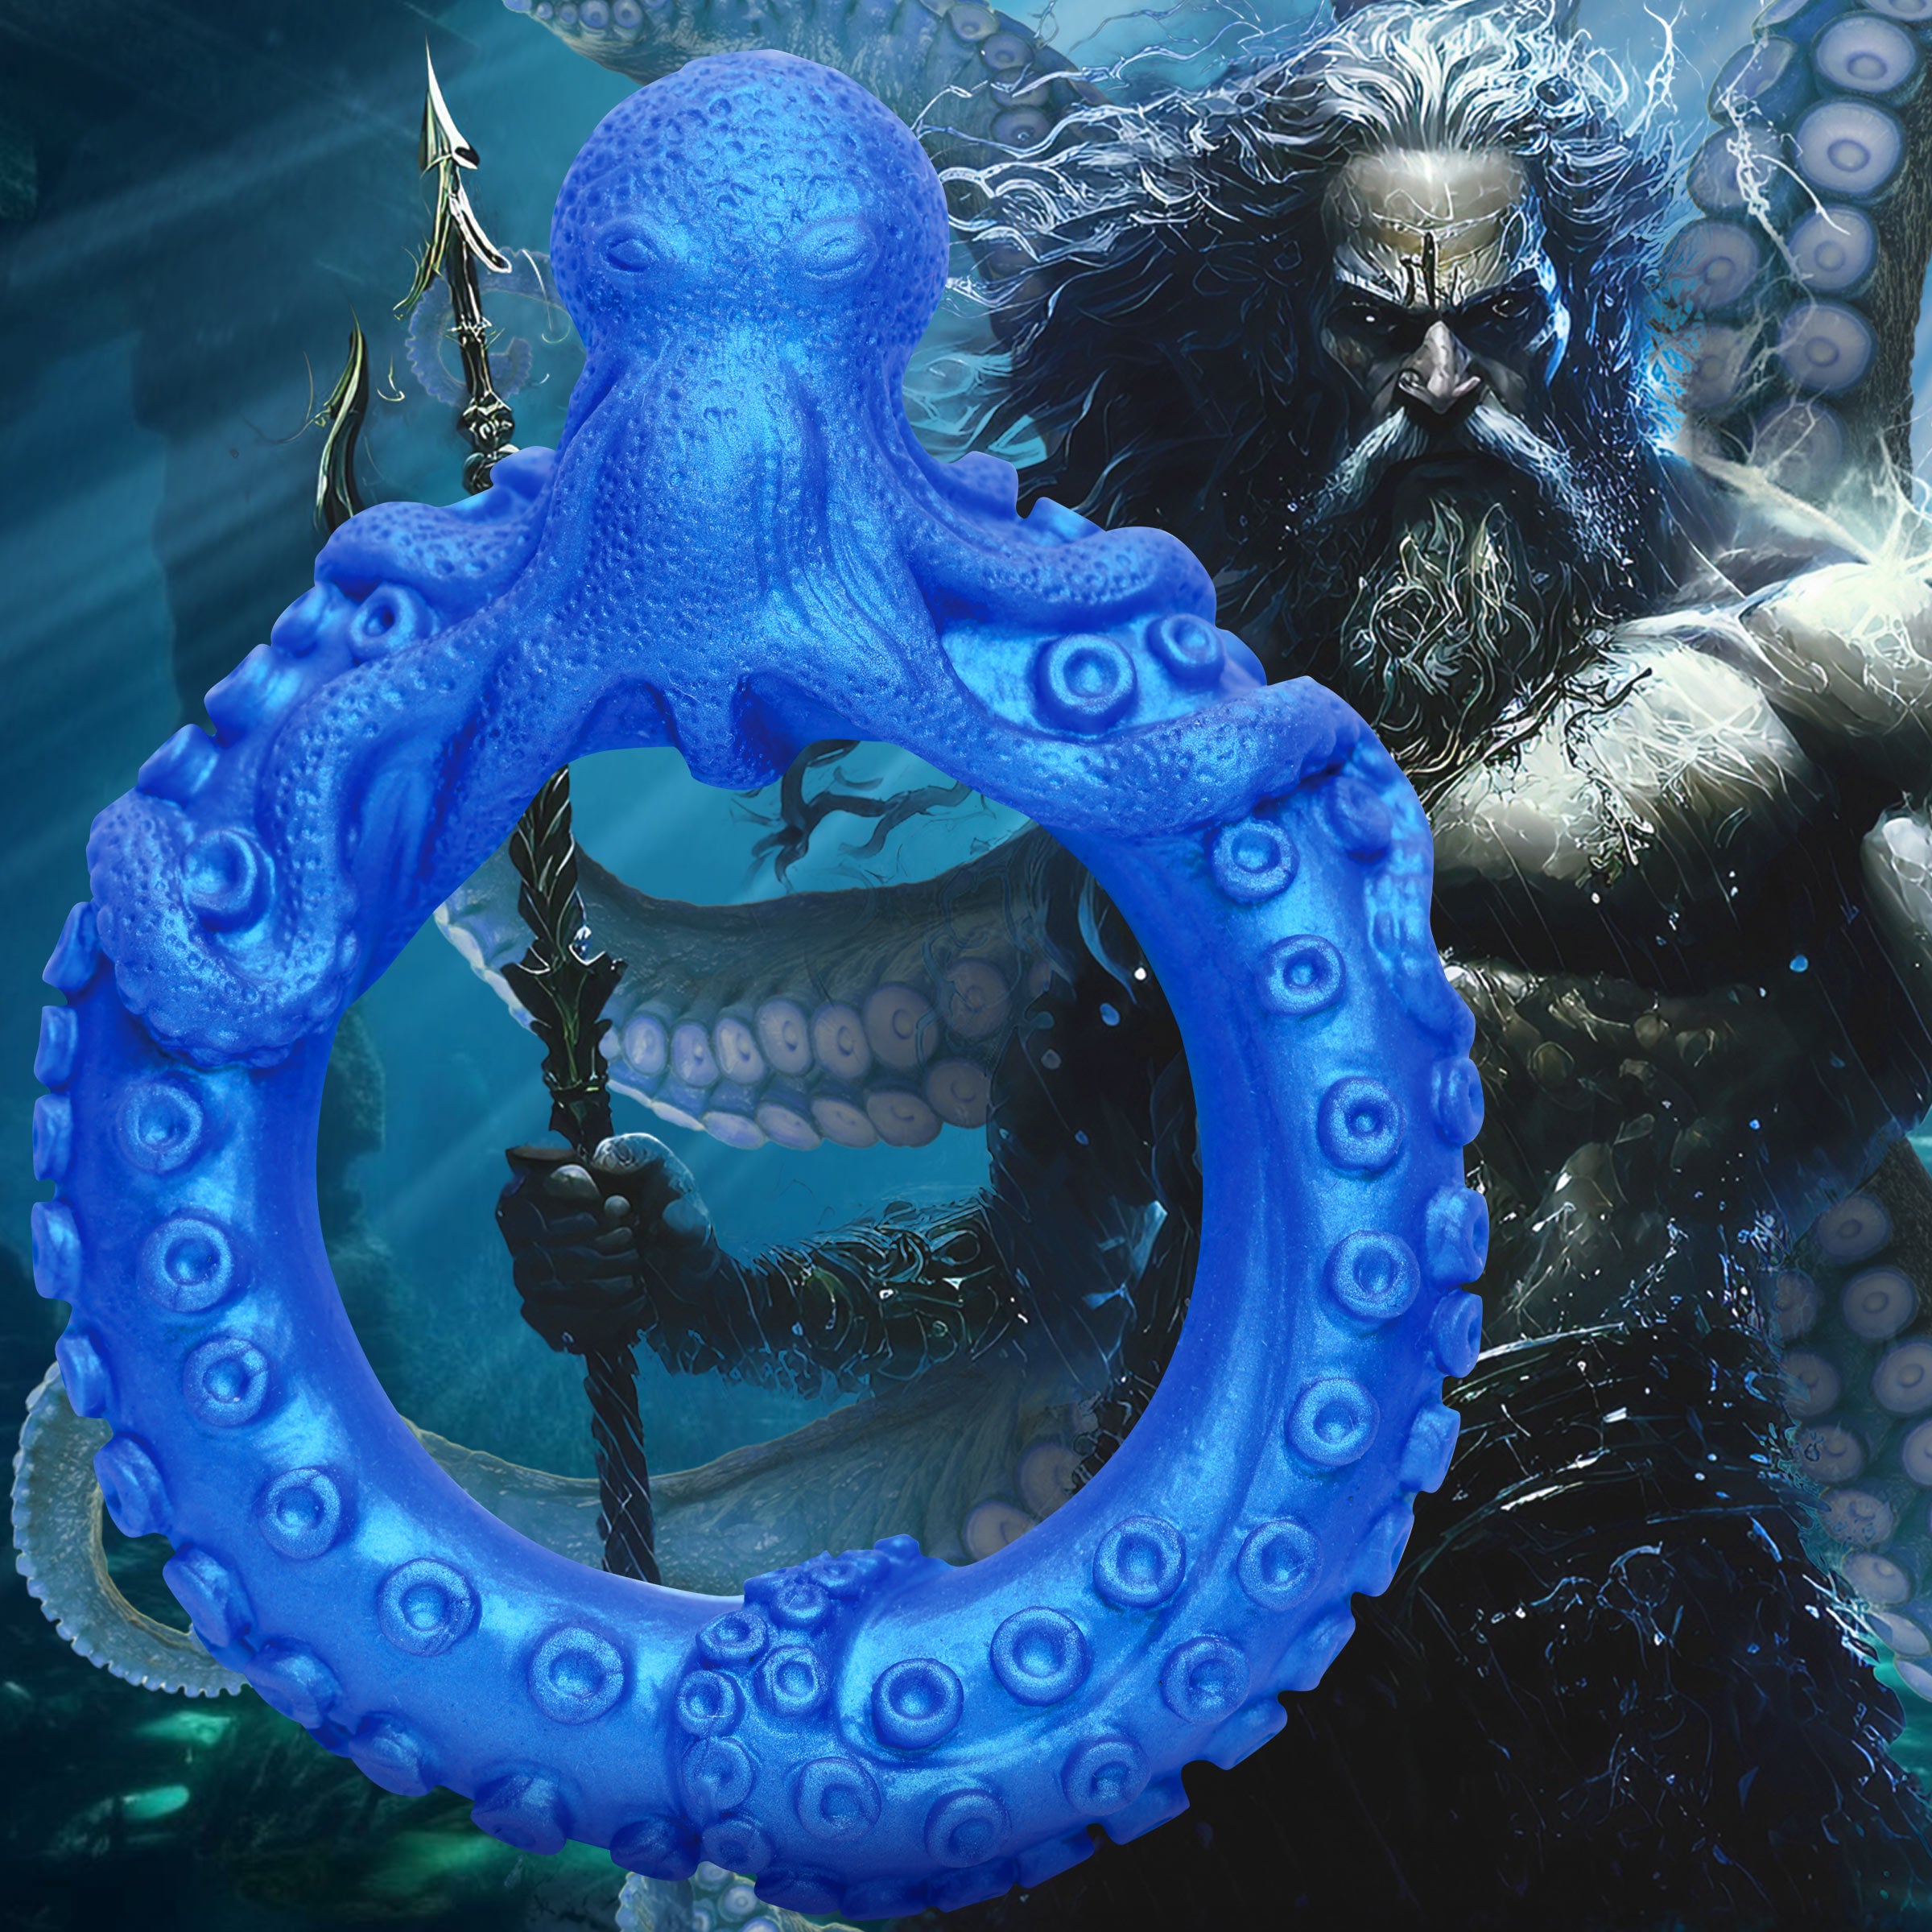 Poseidon's Octo-ring